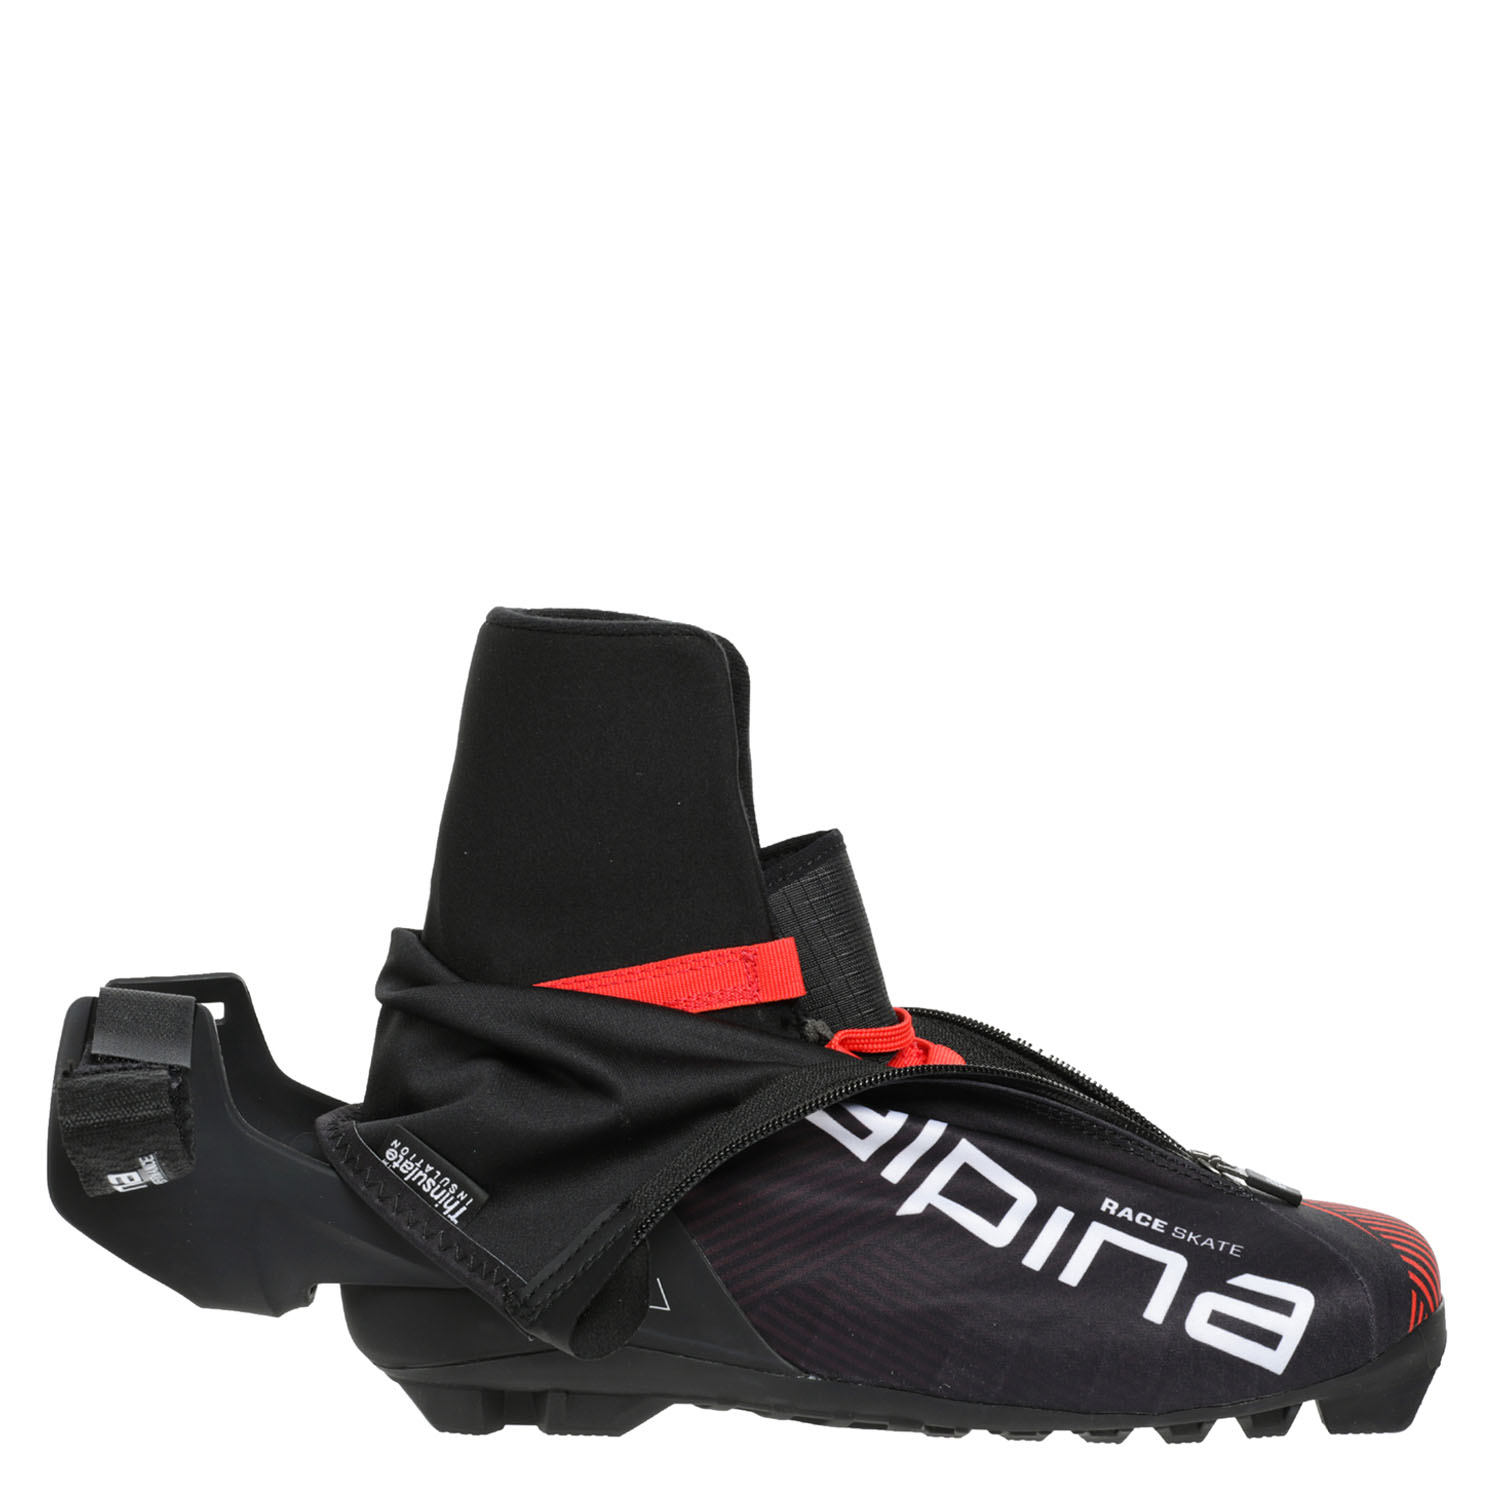 Лыжные ботинки Alpina. 2022-23 RACE SK RED/BLACK/WHITE